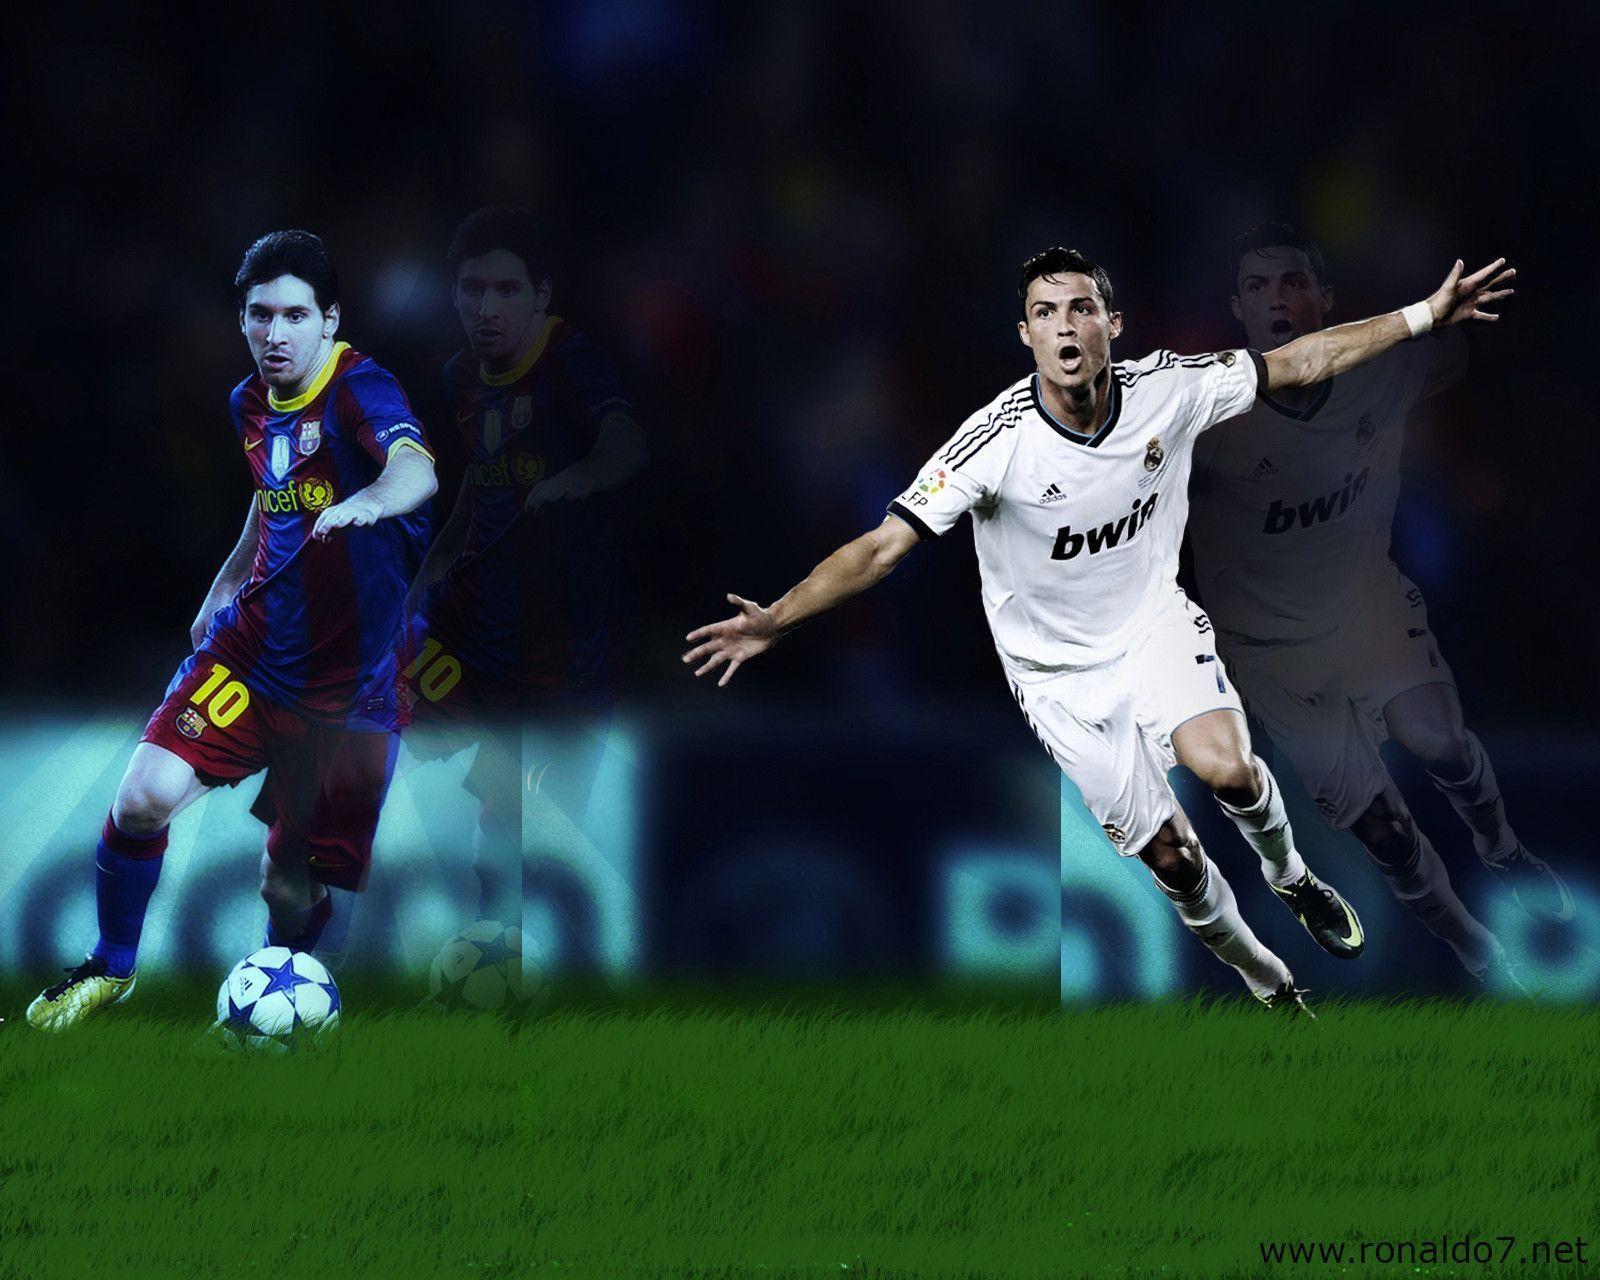 Ronaldo And Messi Wallpapers - Wallpaper Cave